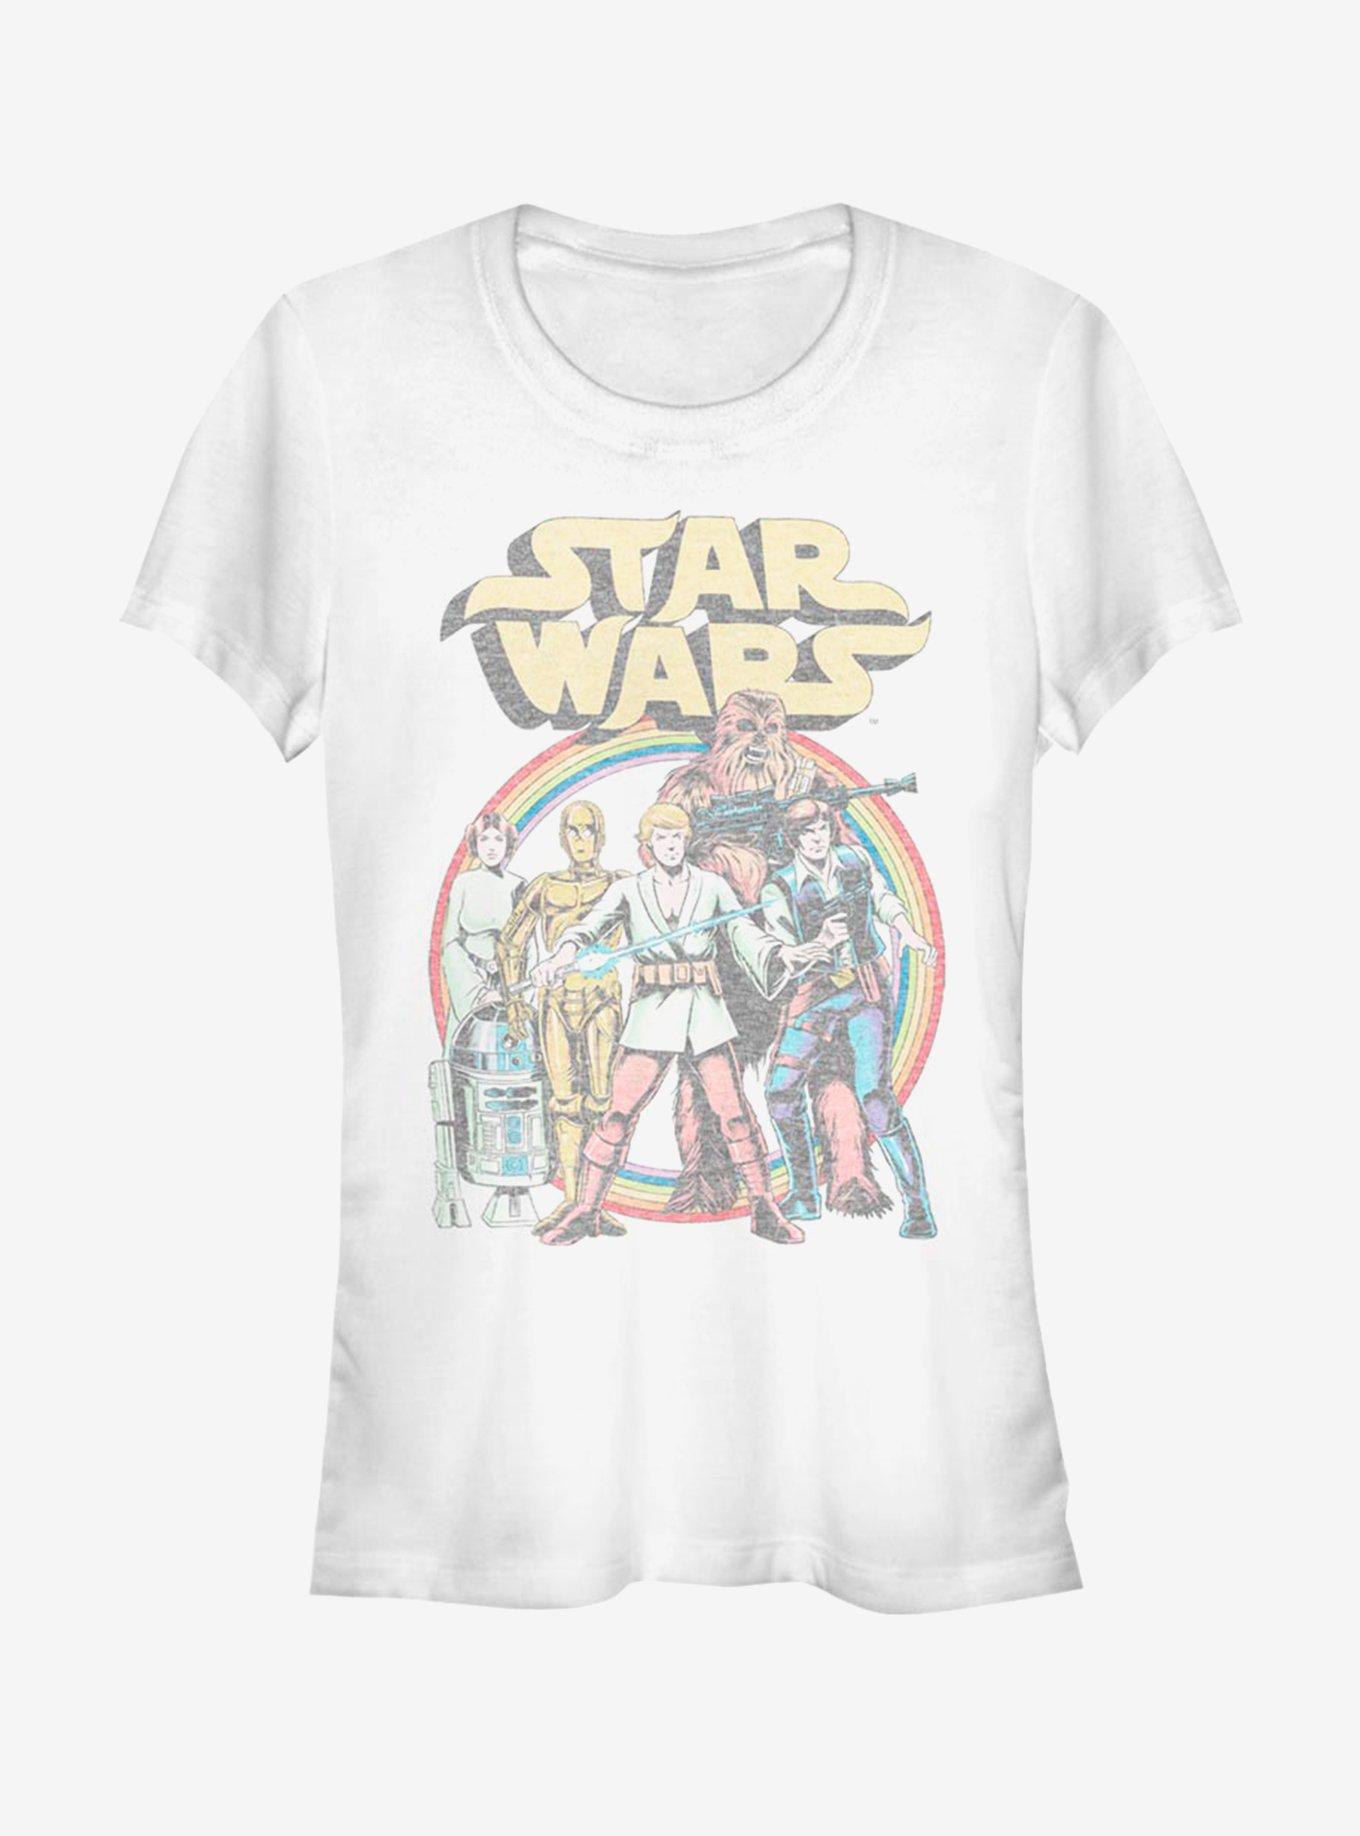 Star Wars Star Wars Rainbow Girls T-Shirt, WHITE, hi-res